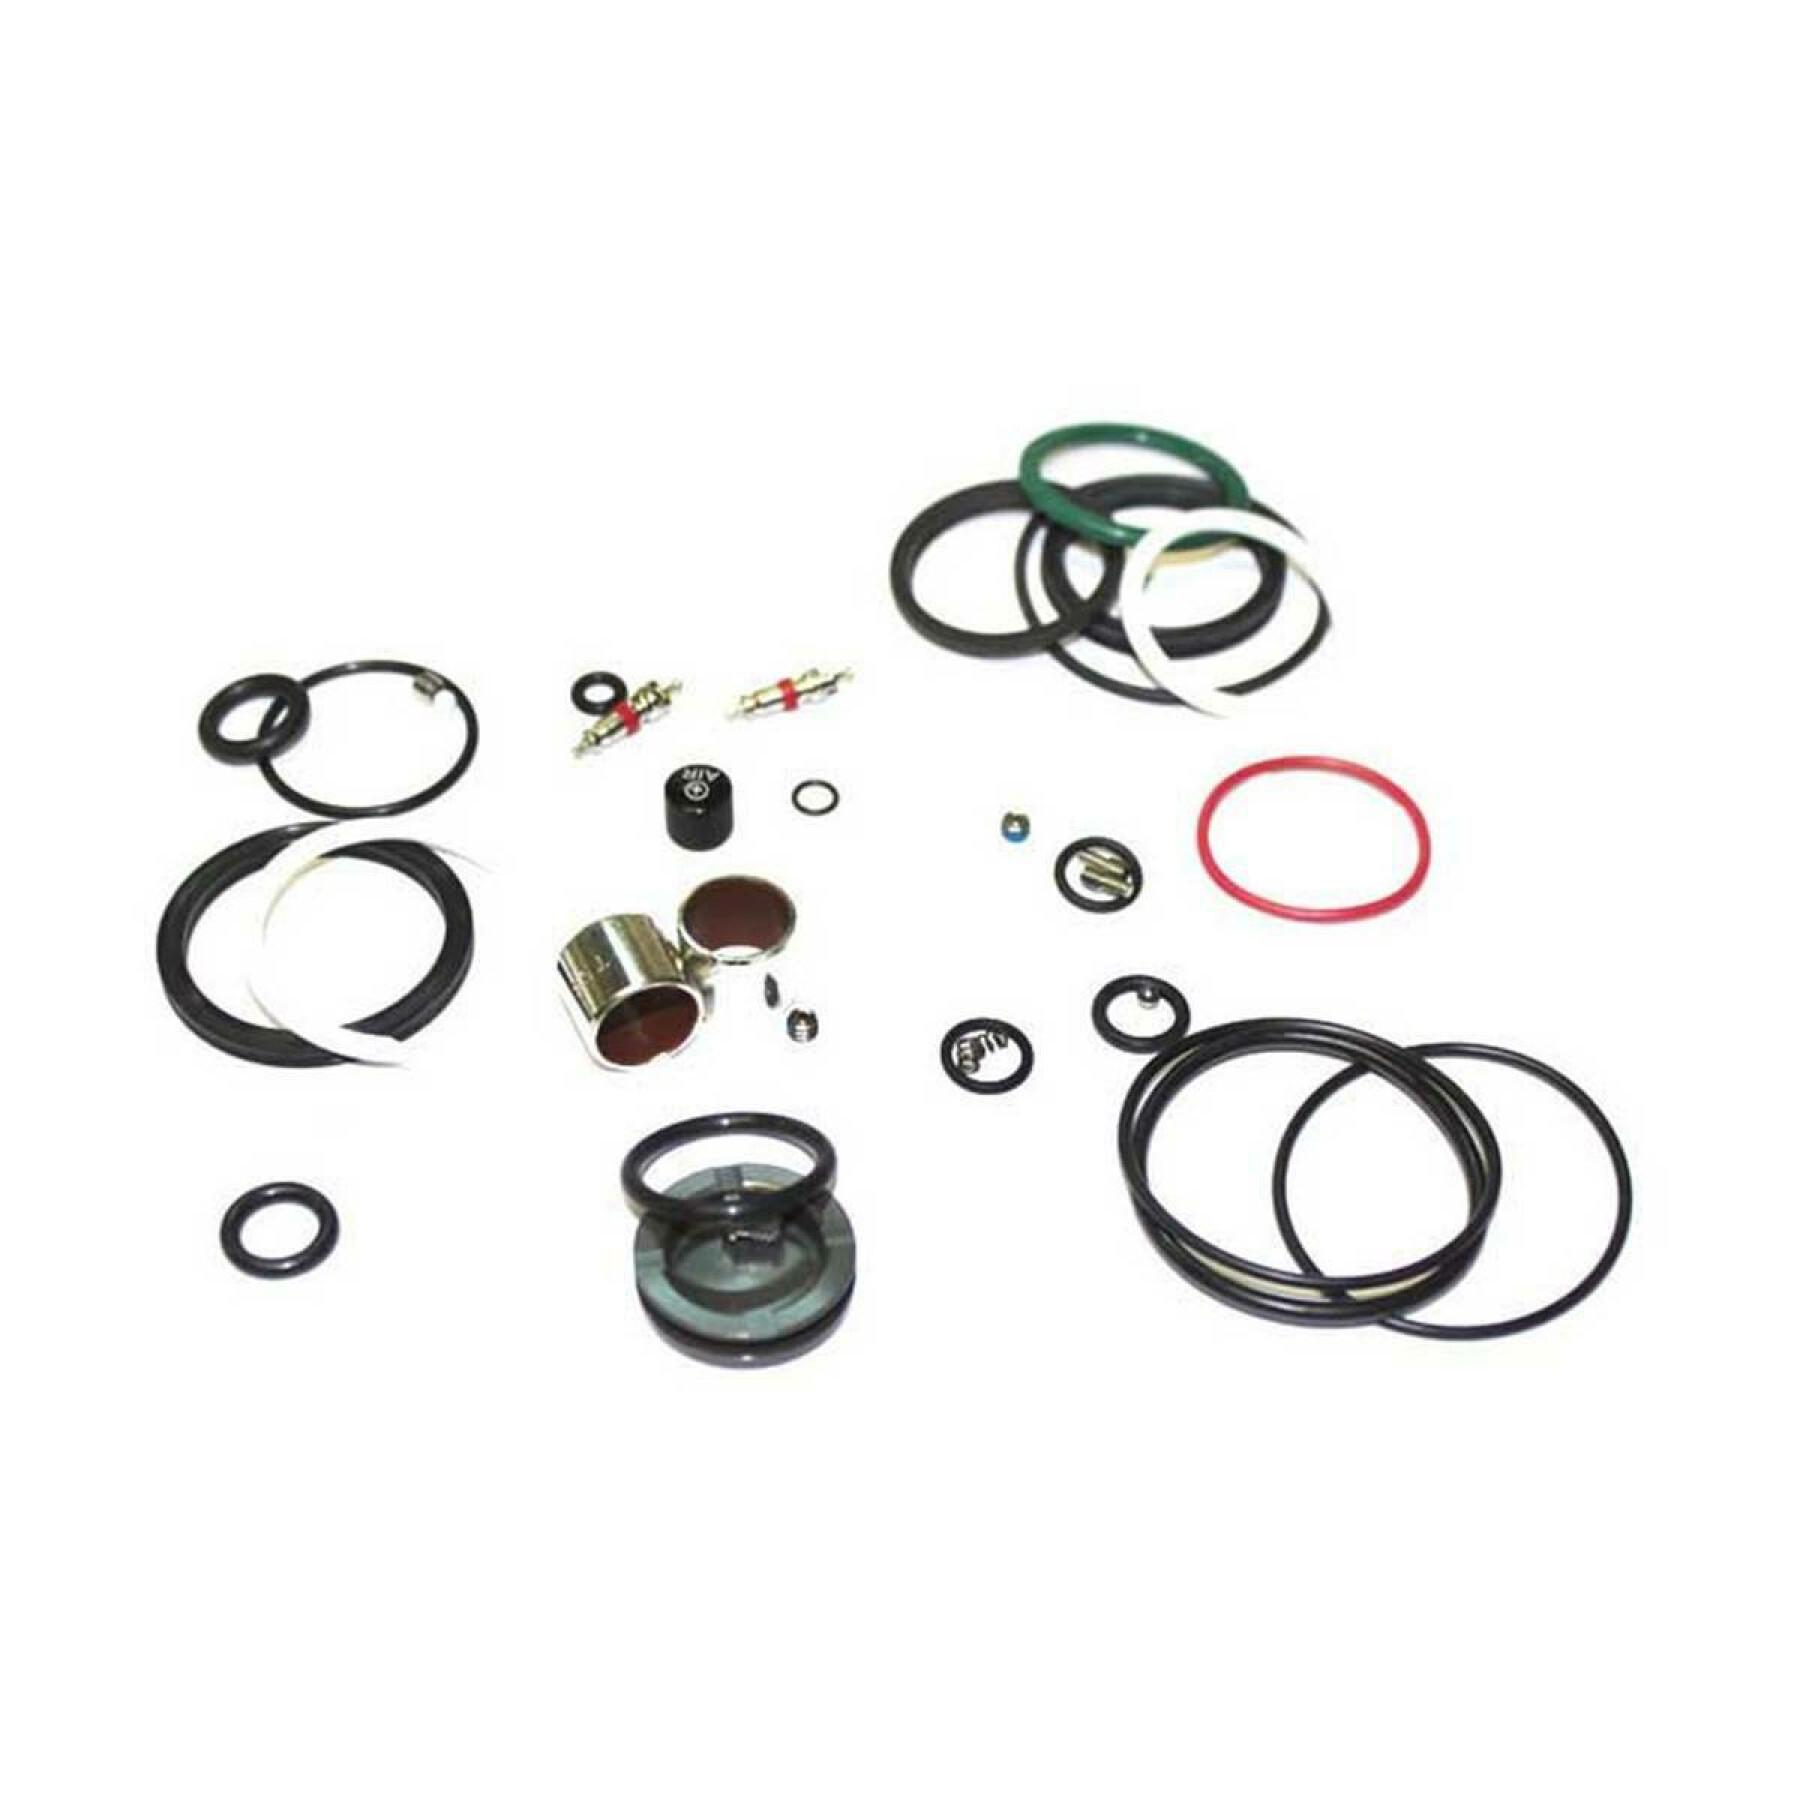 Shock absorber parts kit Rockshox Basic 2013 Mn3 Rt3